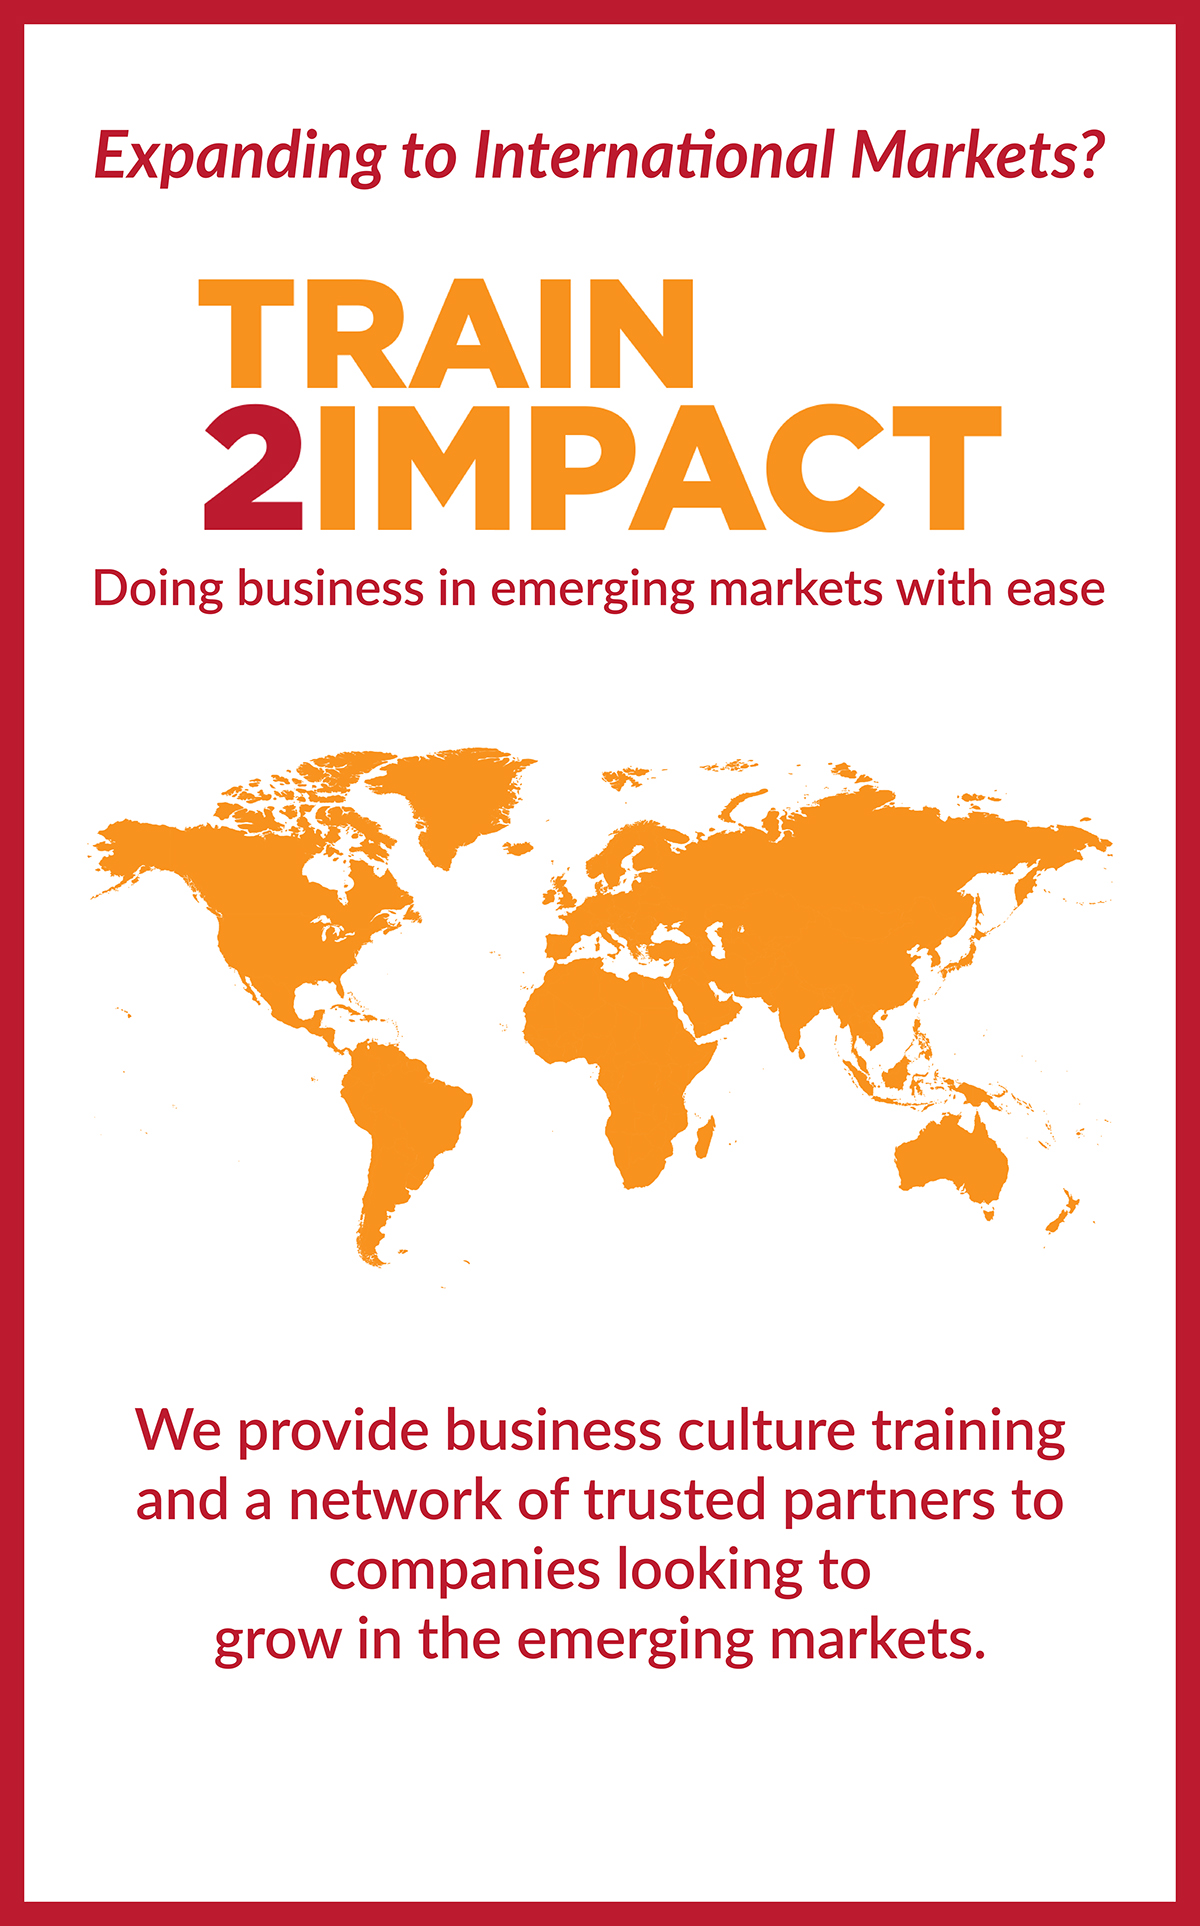 Train2Impact training impact Website logo organization NGO business non-profit simple